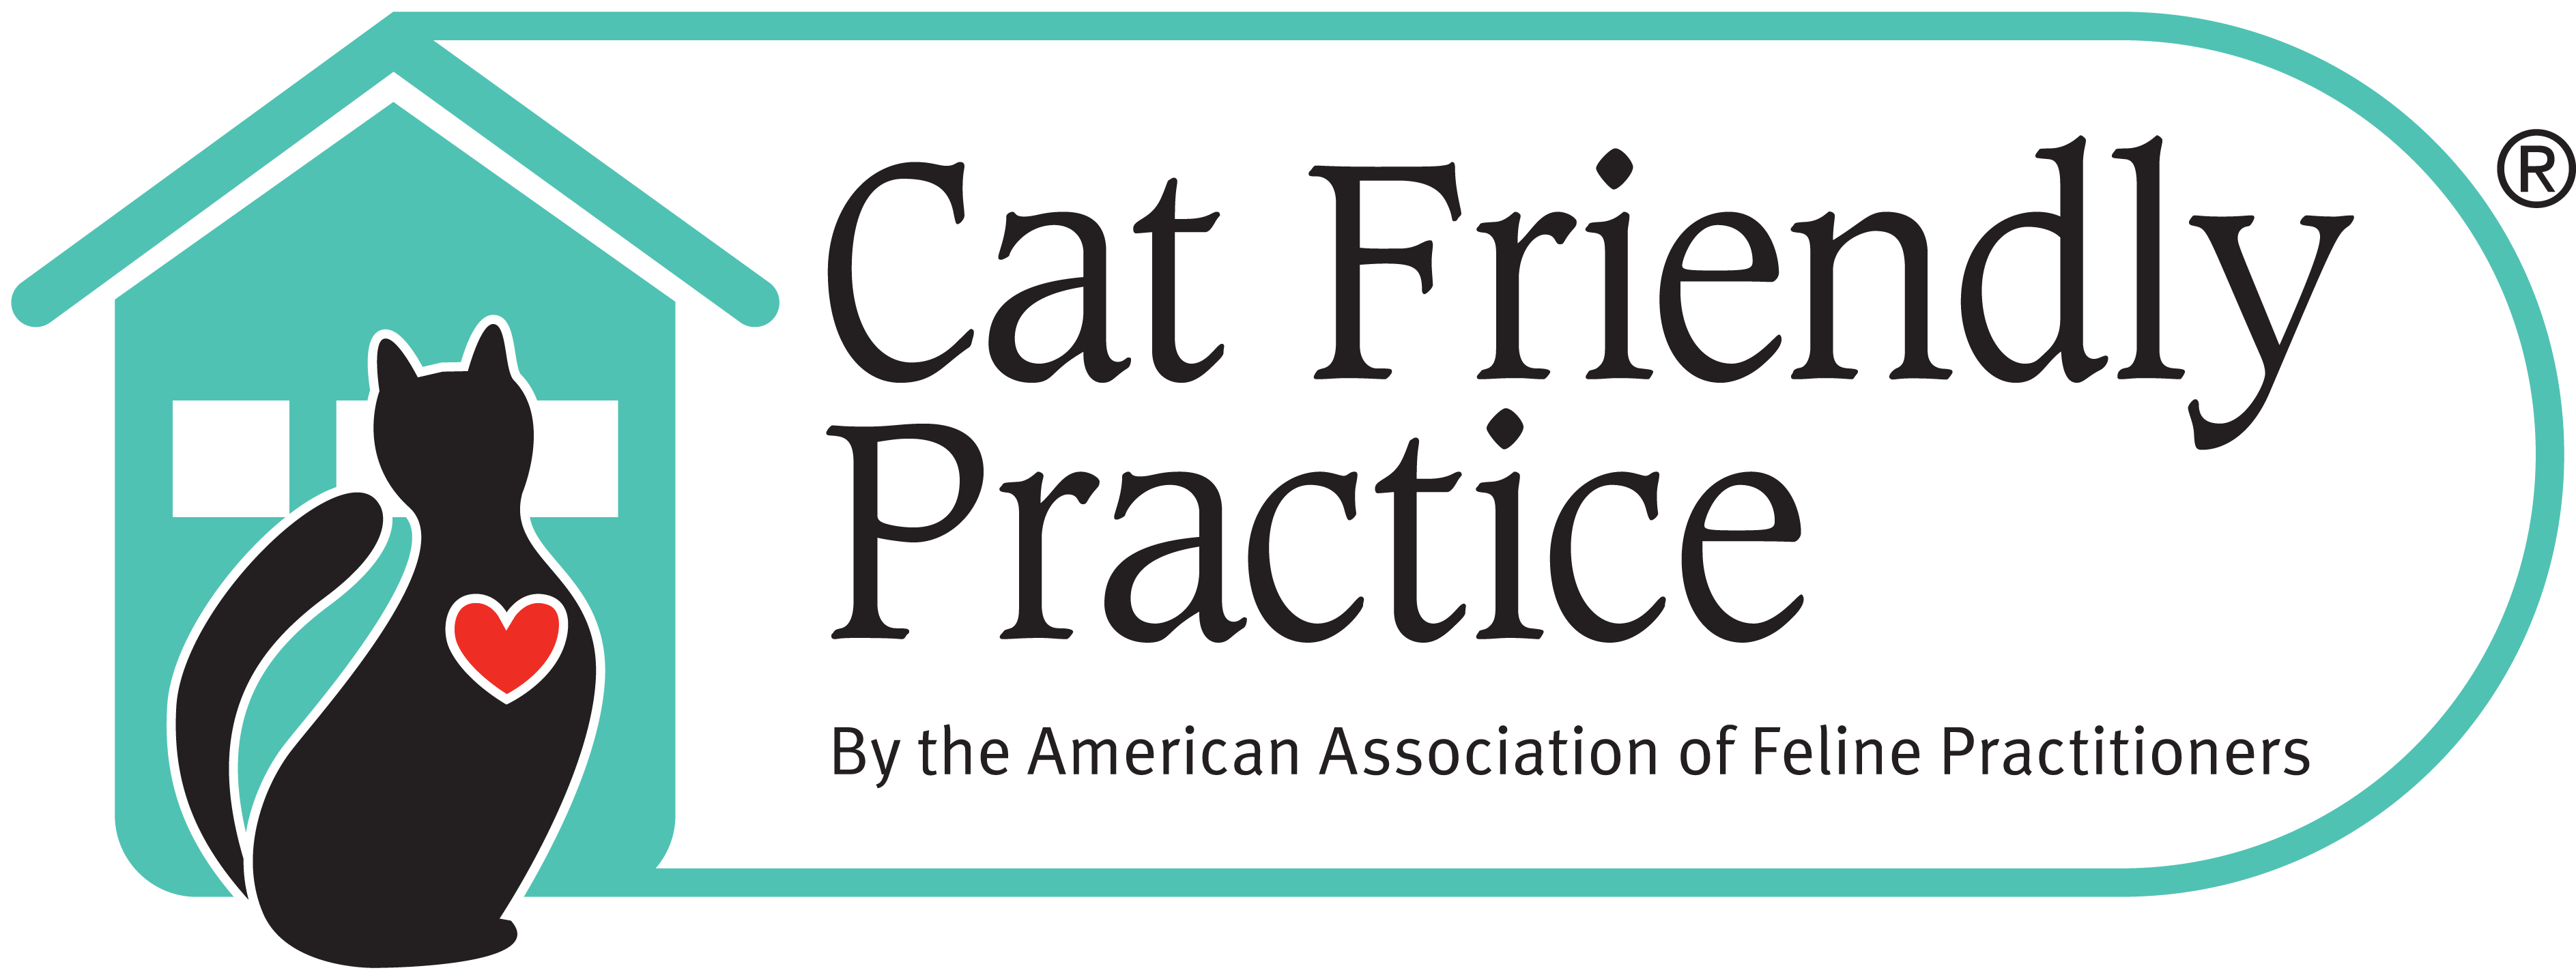 Cat Friendly Practice Program Logo